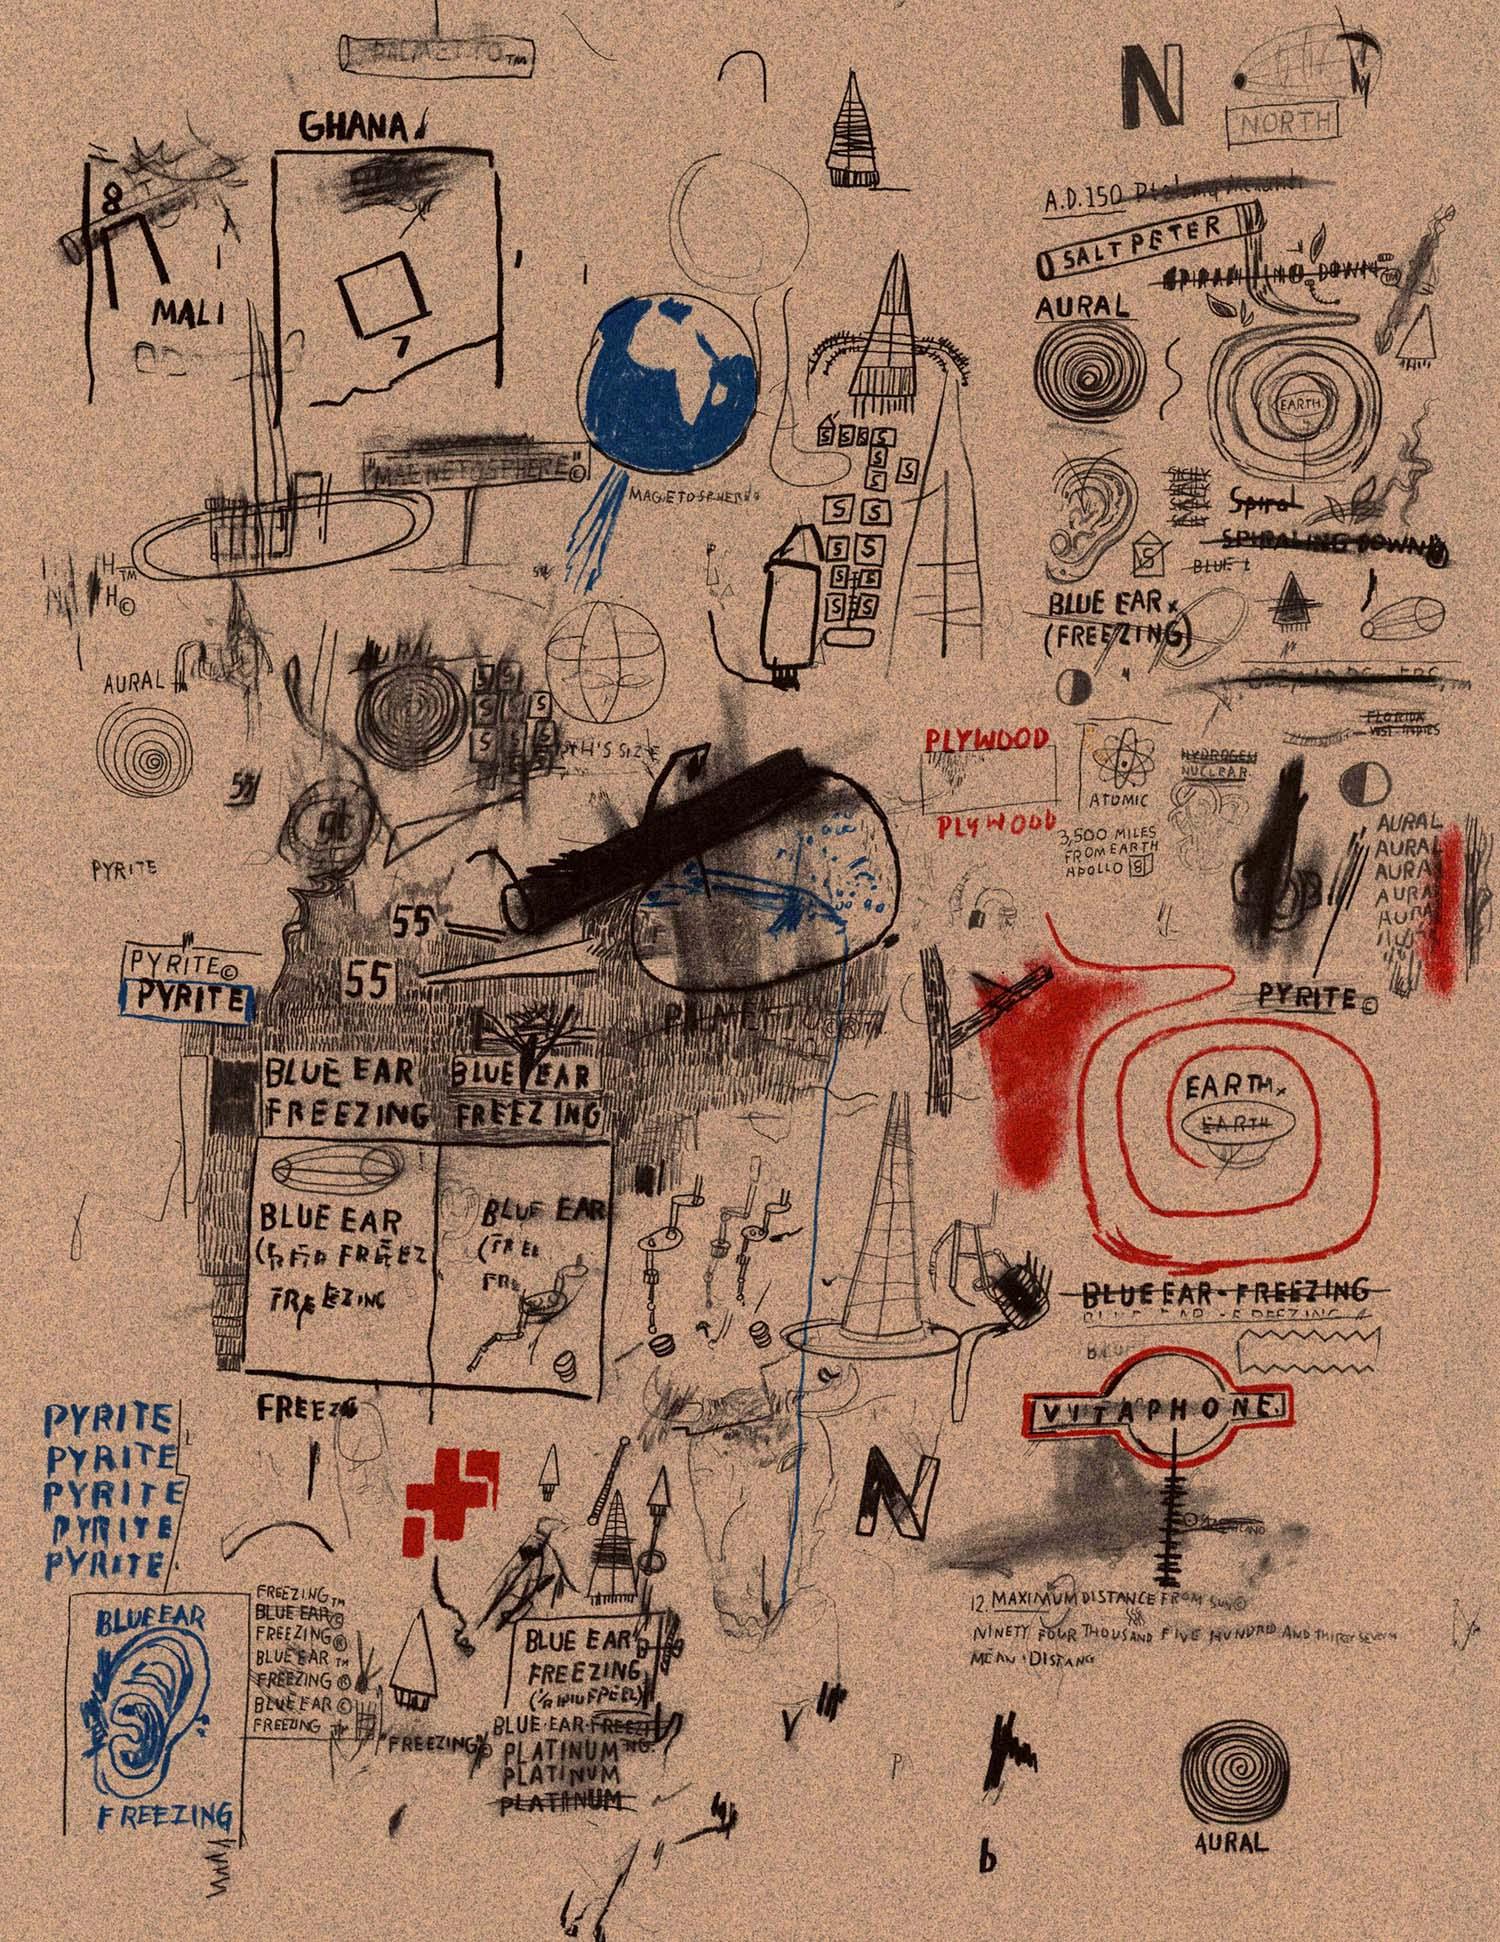 Basquiat Area 1985 (Basquiat birthday Area 1985)  - Print by Jean-Michel Basquiat